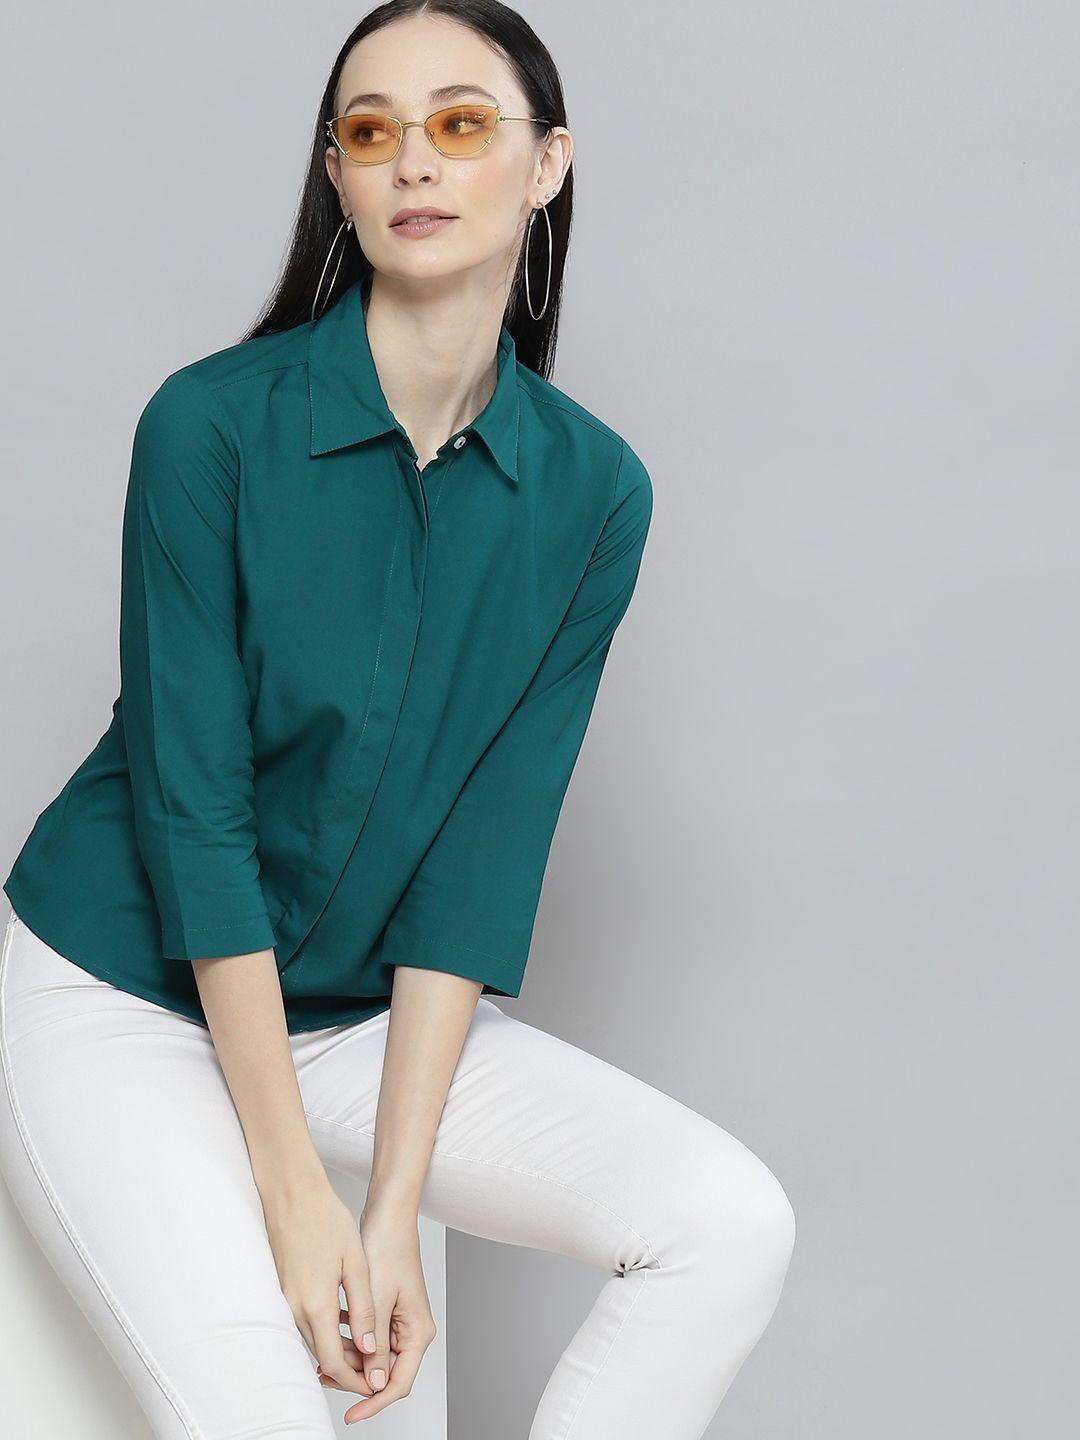 dennison women teal green solid smart slim fit casual shirt